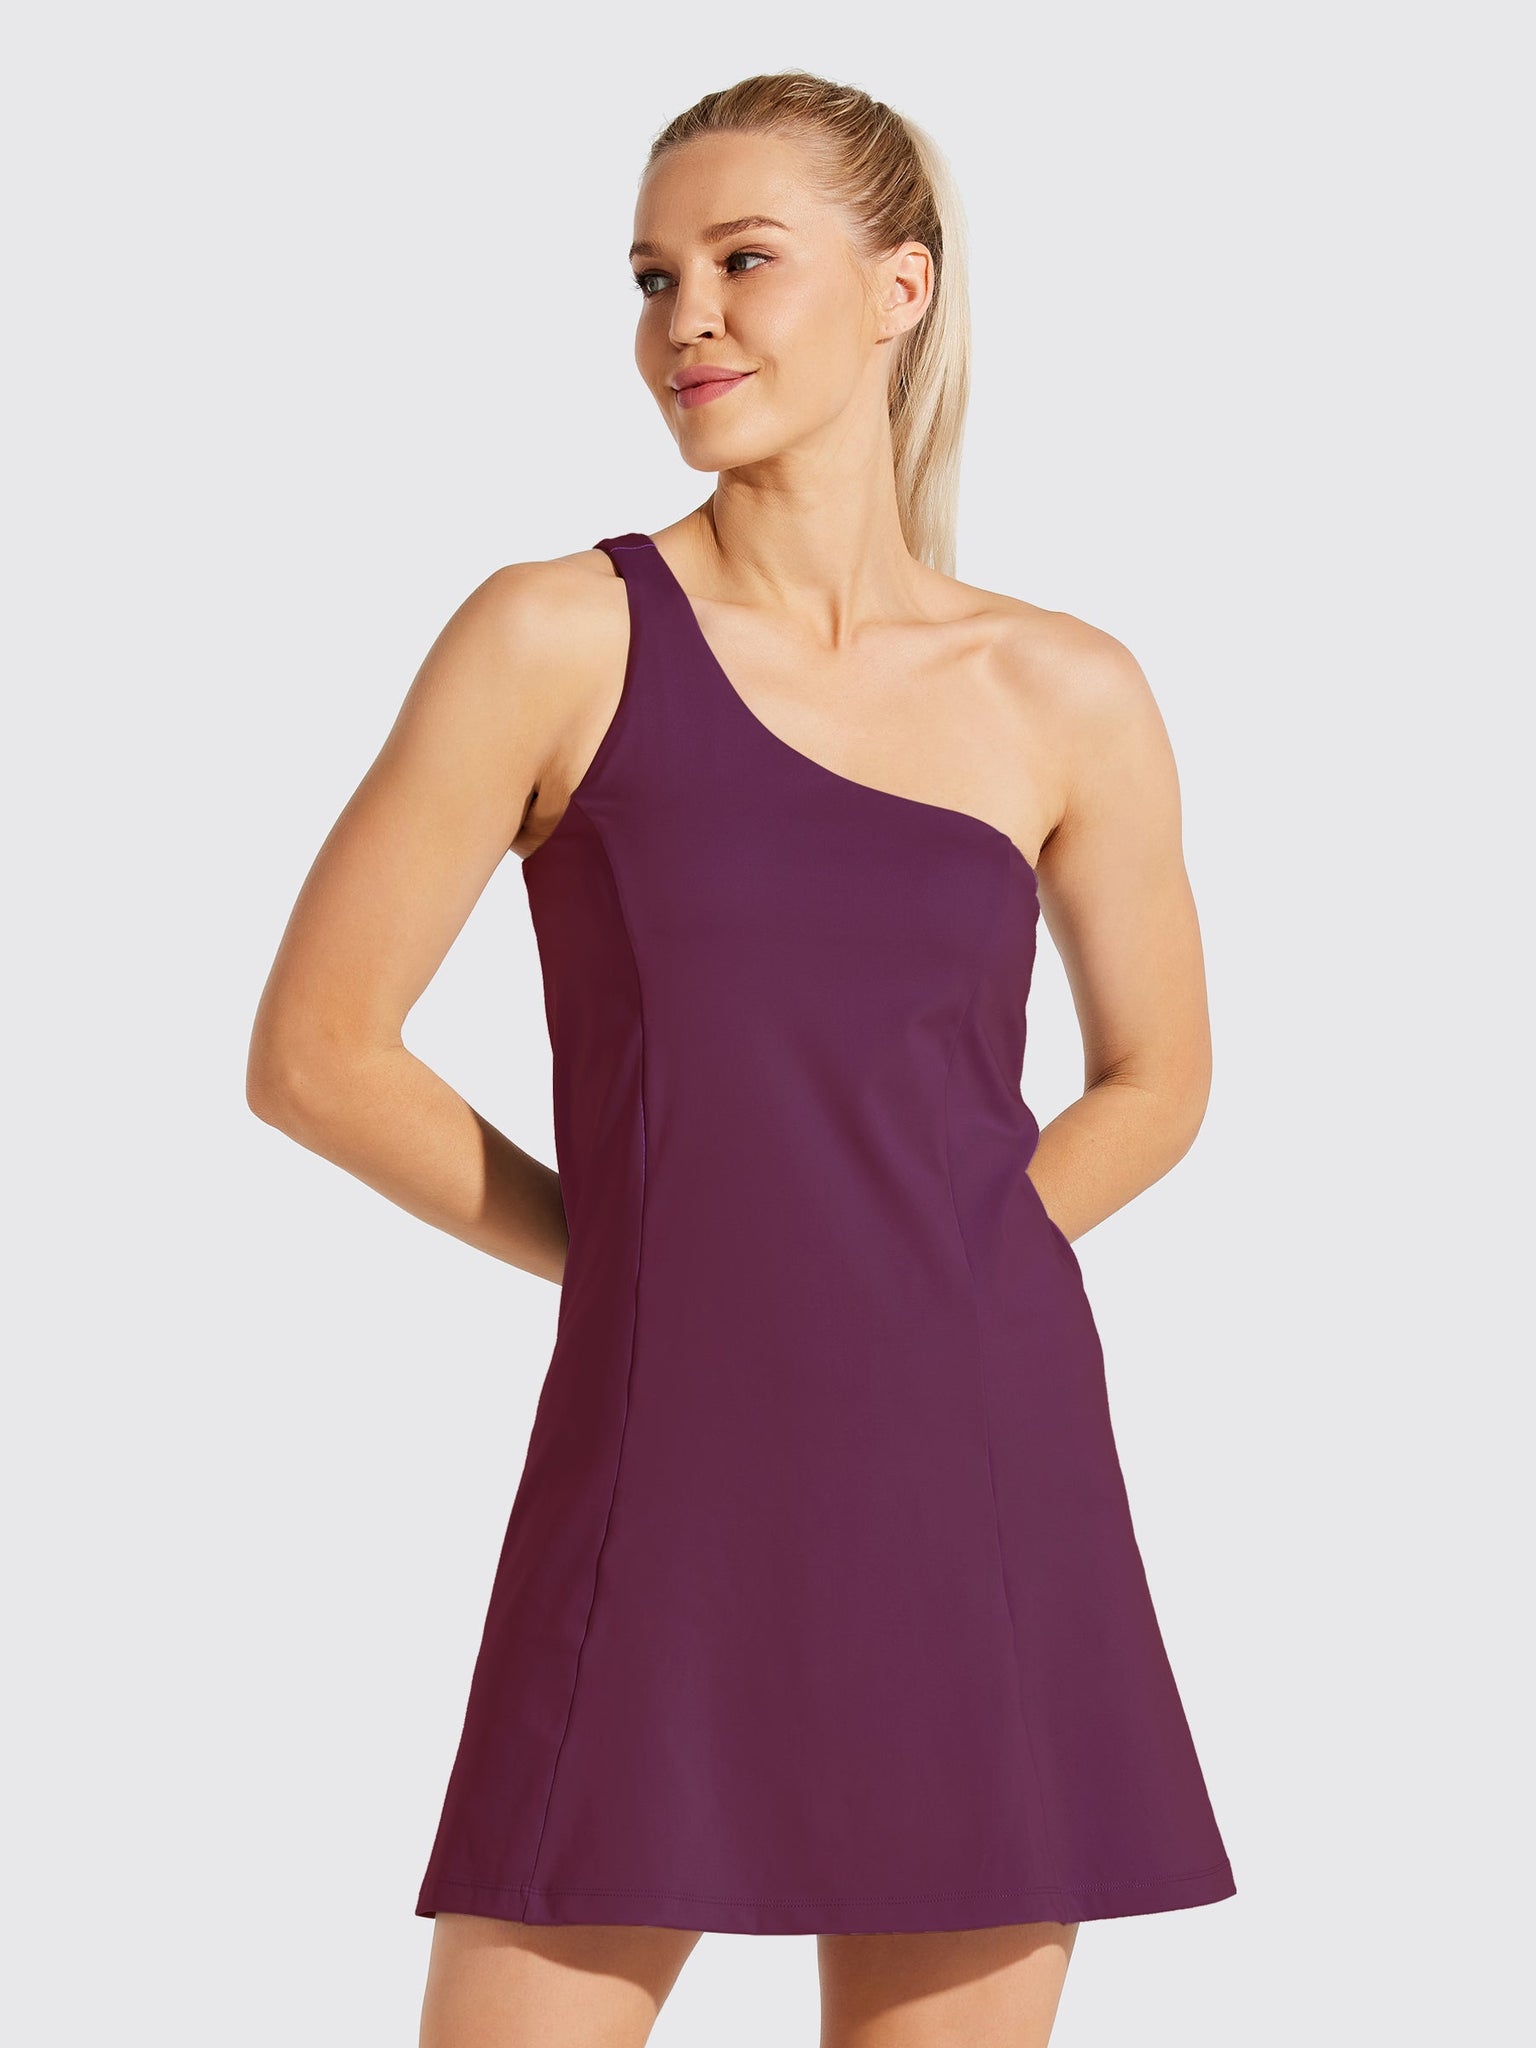 Willit Women's One Shoulder Dress_Purple2